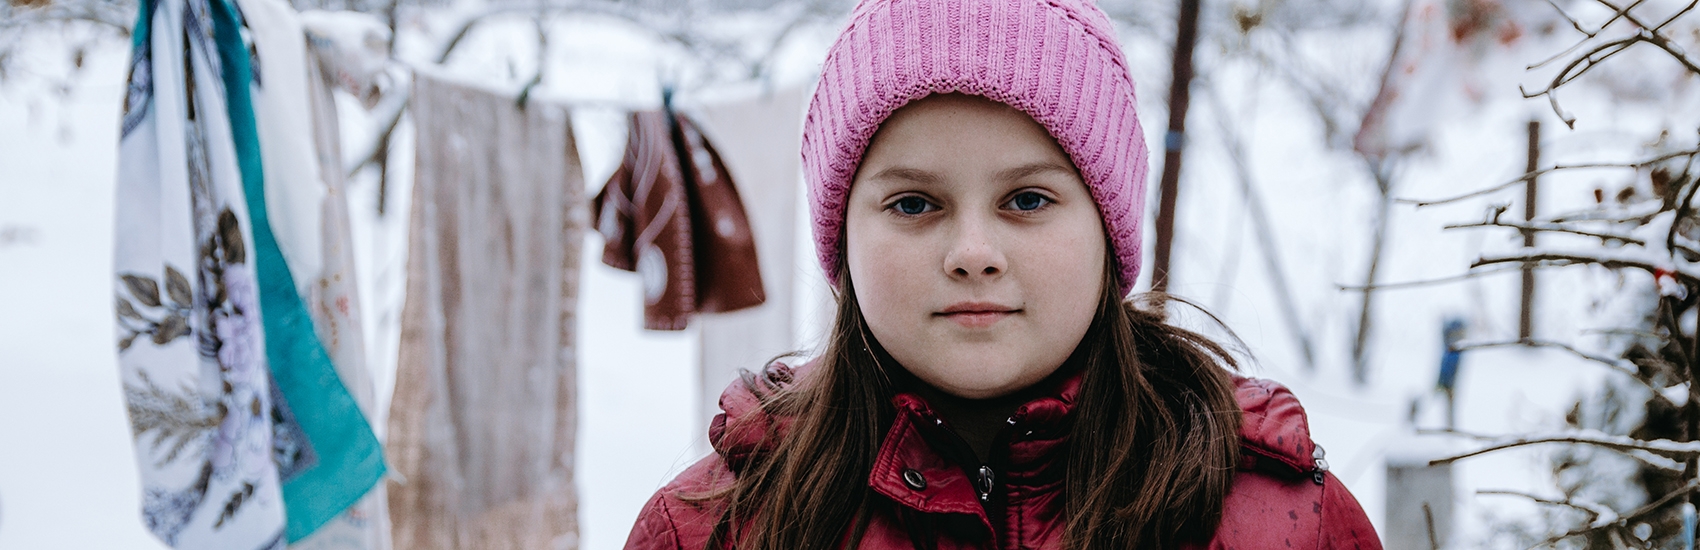 Send a Message of Hope to Children in Ukraine 